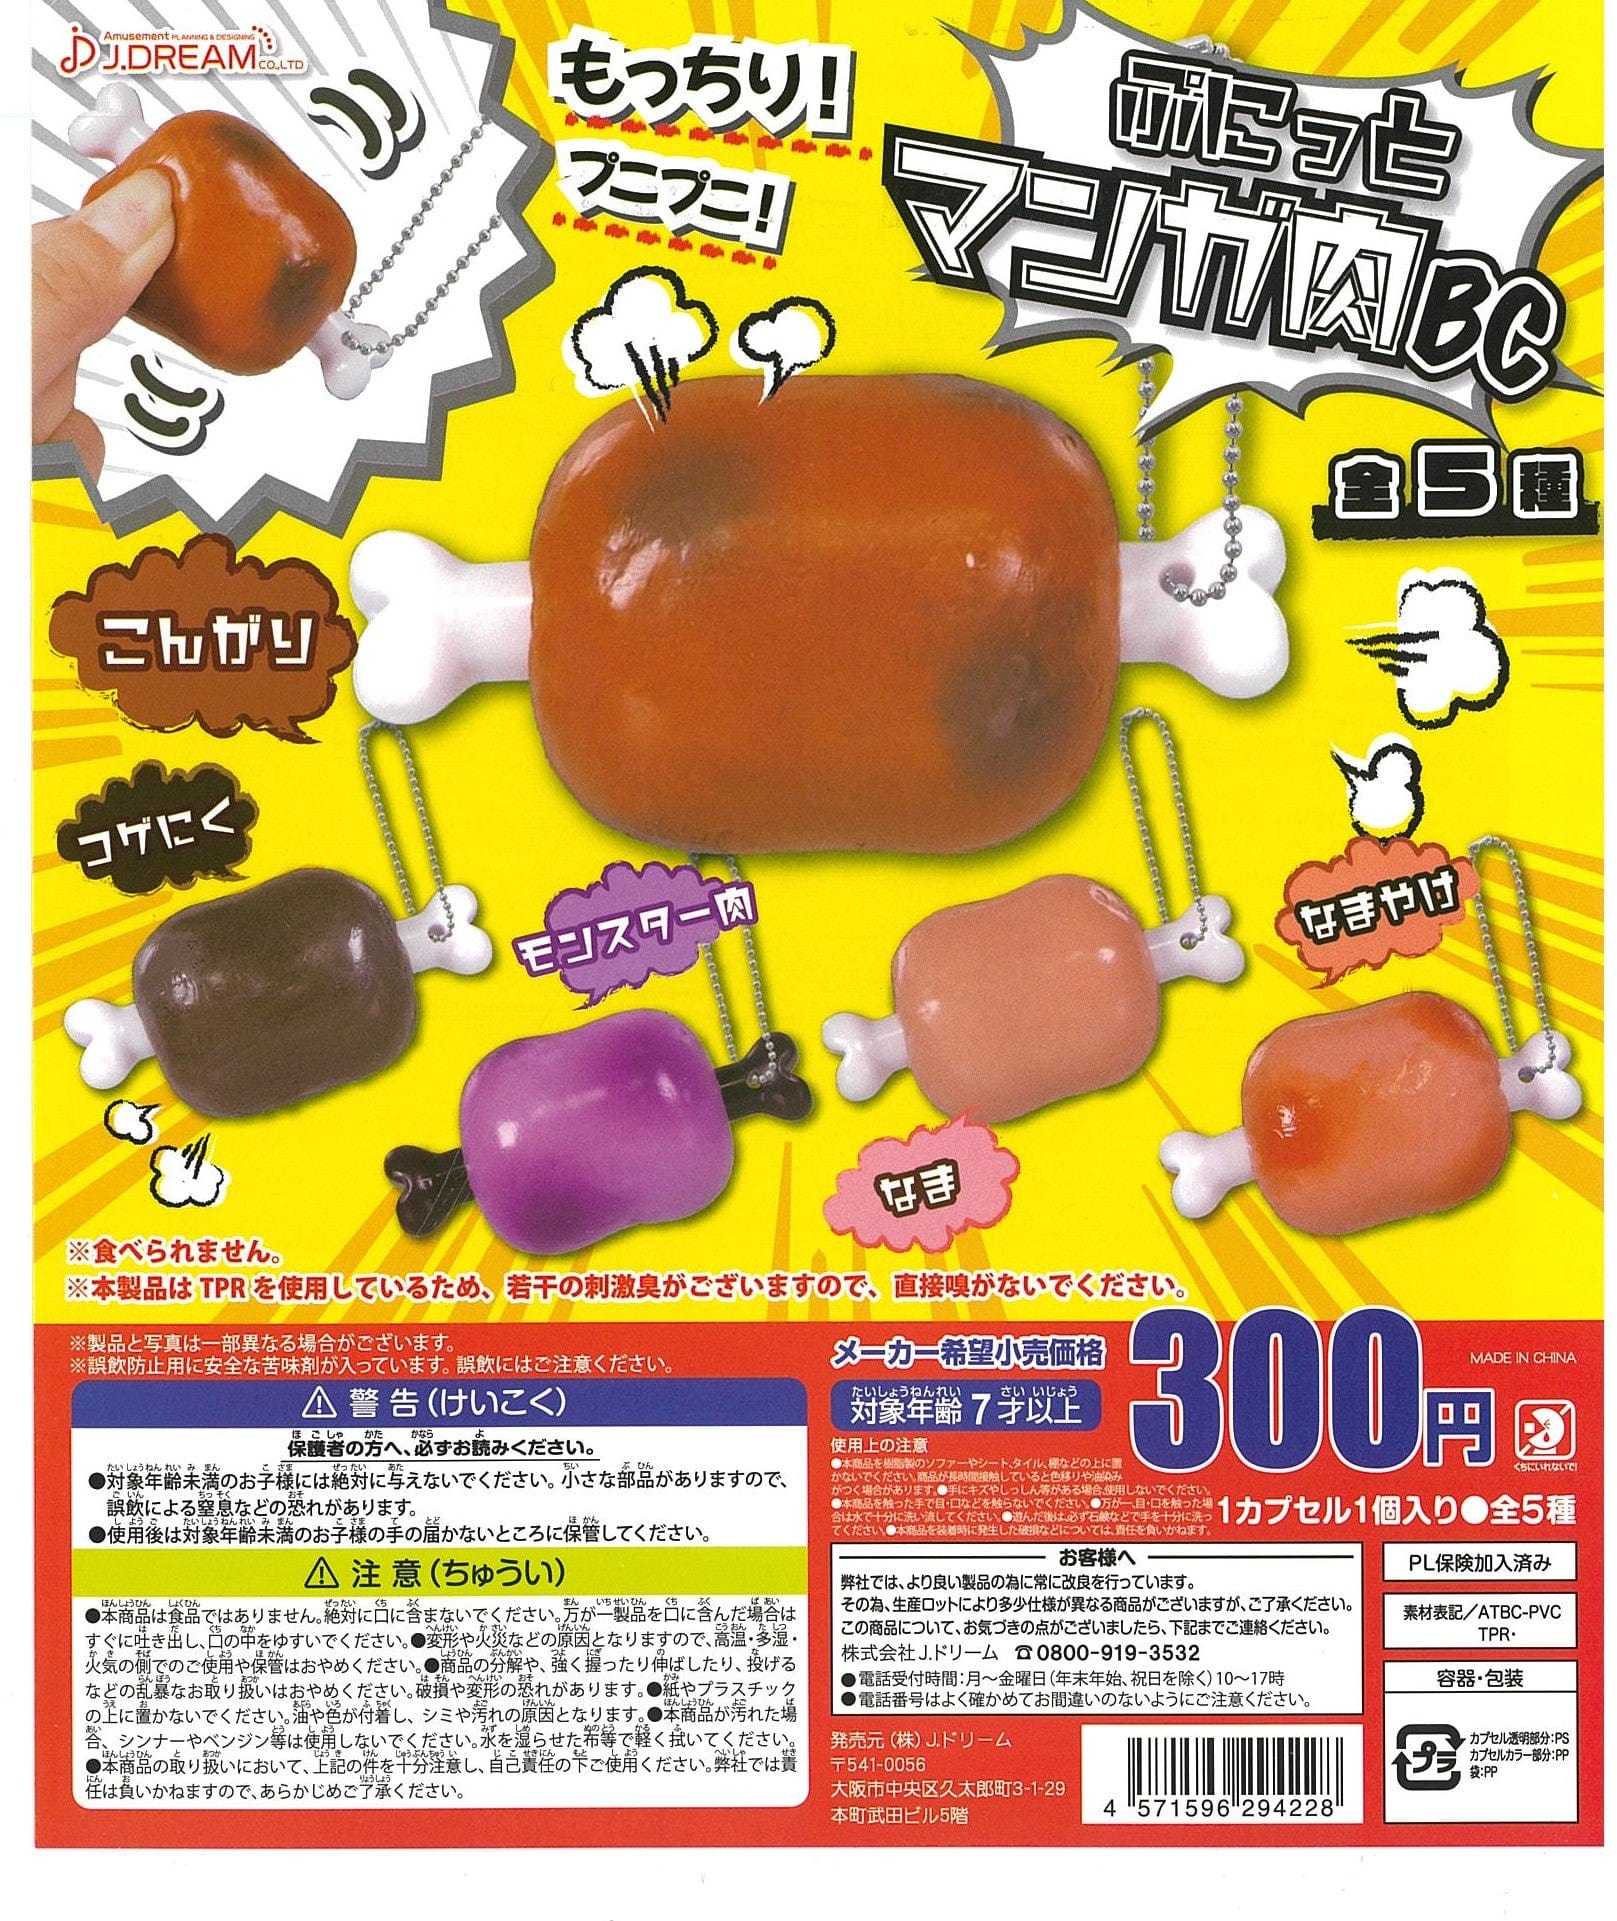 J.DREAM CP2426 Punitto Manga Meat Ball Chain